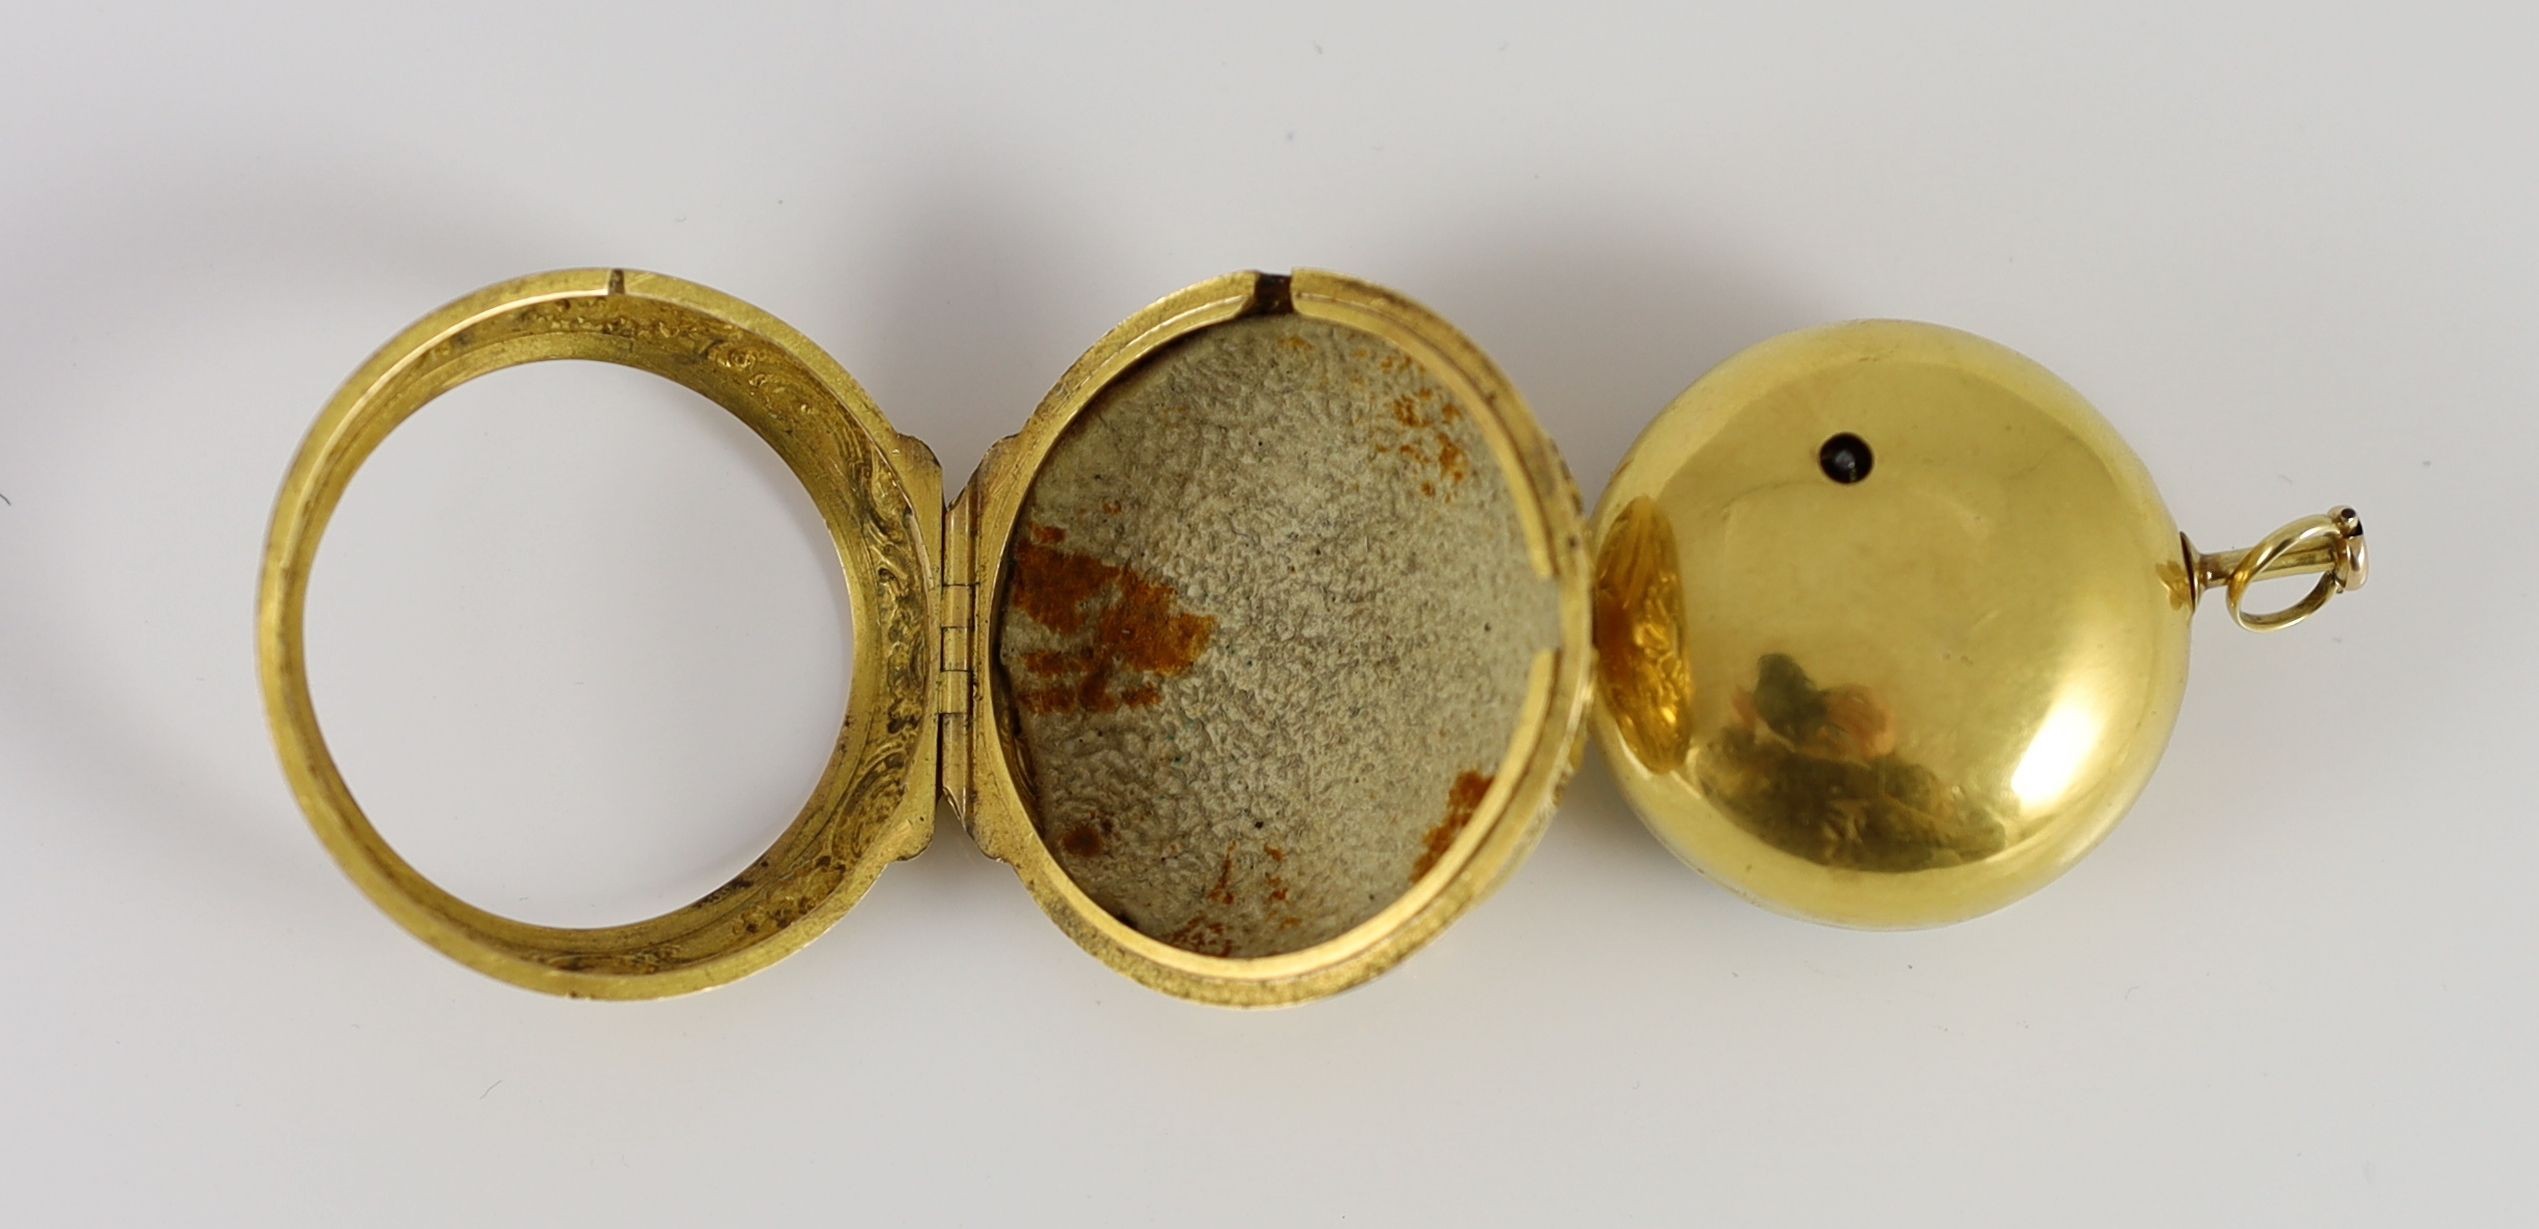 A George II 22ct gold pair cased key wind verge pocket watch, by Charles Page, London